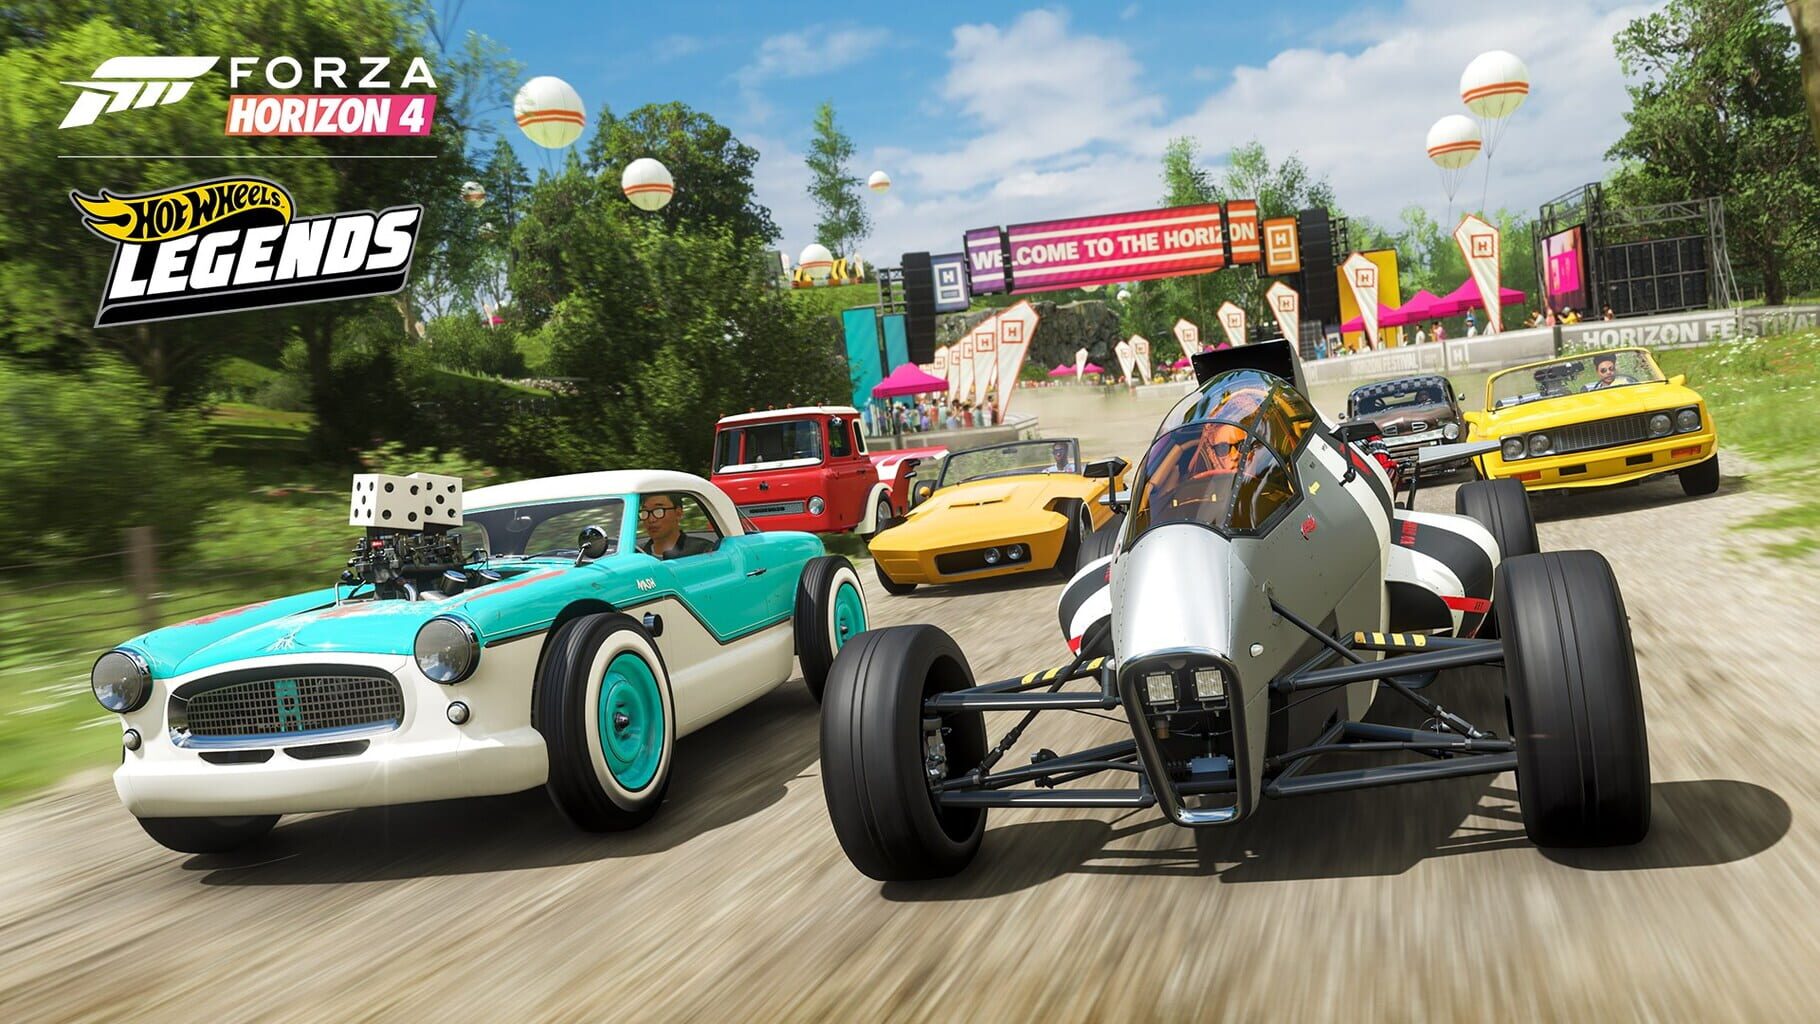 Arte - Forza Horizon 4: Hot Wheels Legends Car Pack